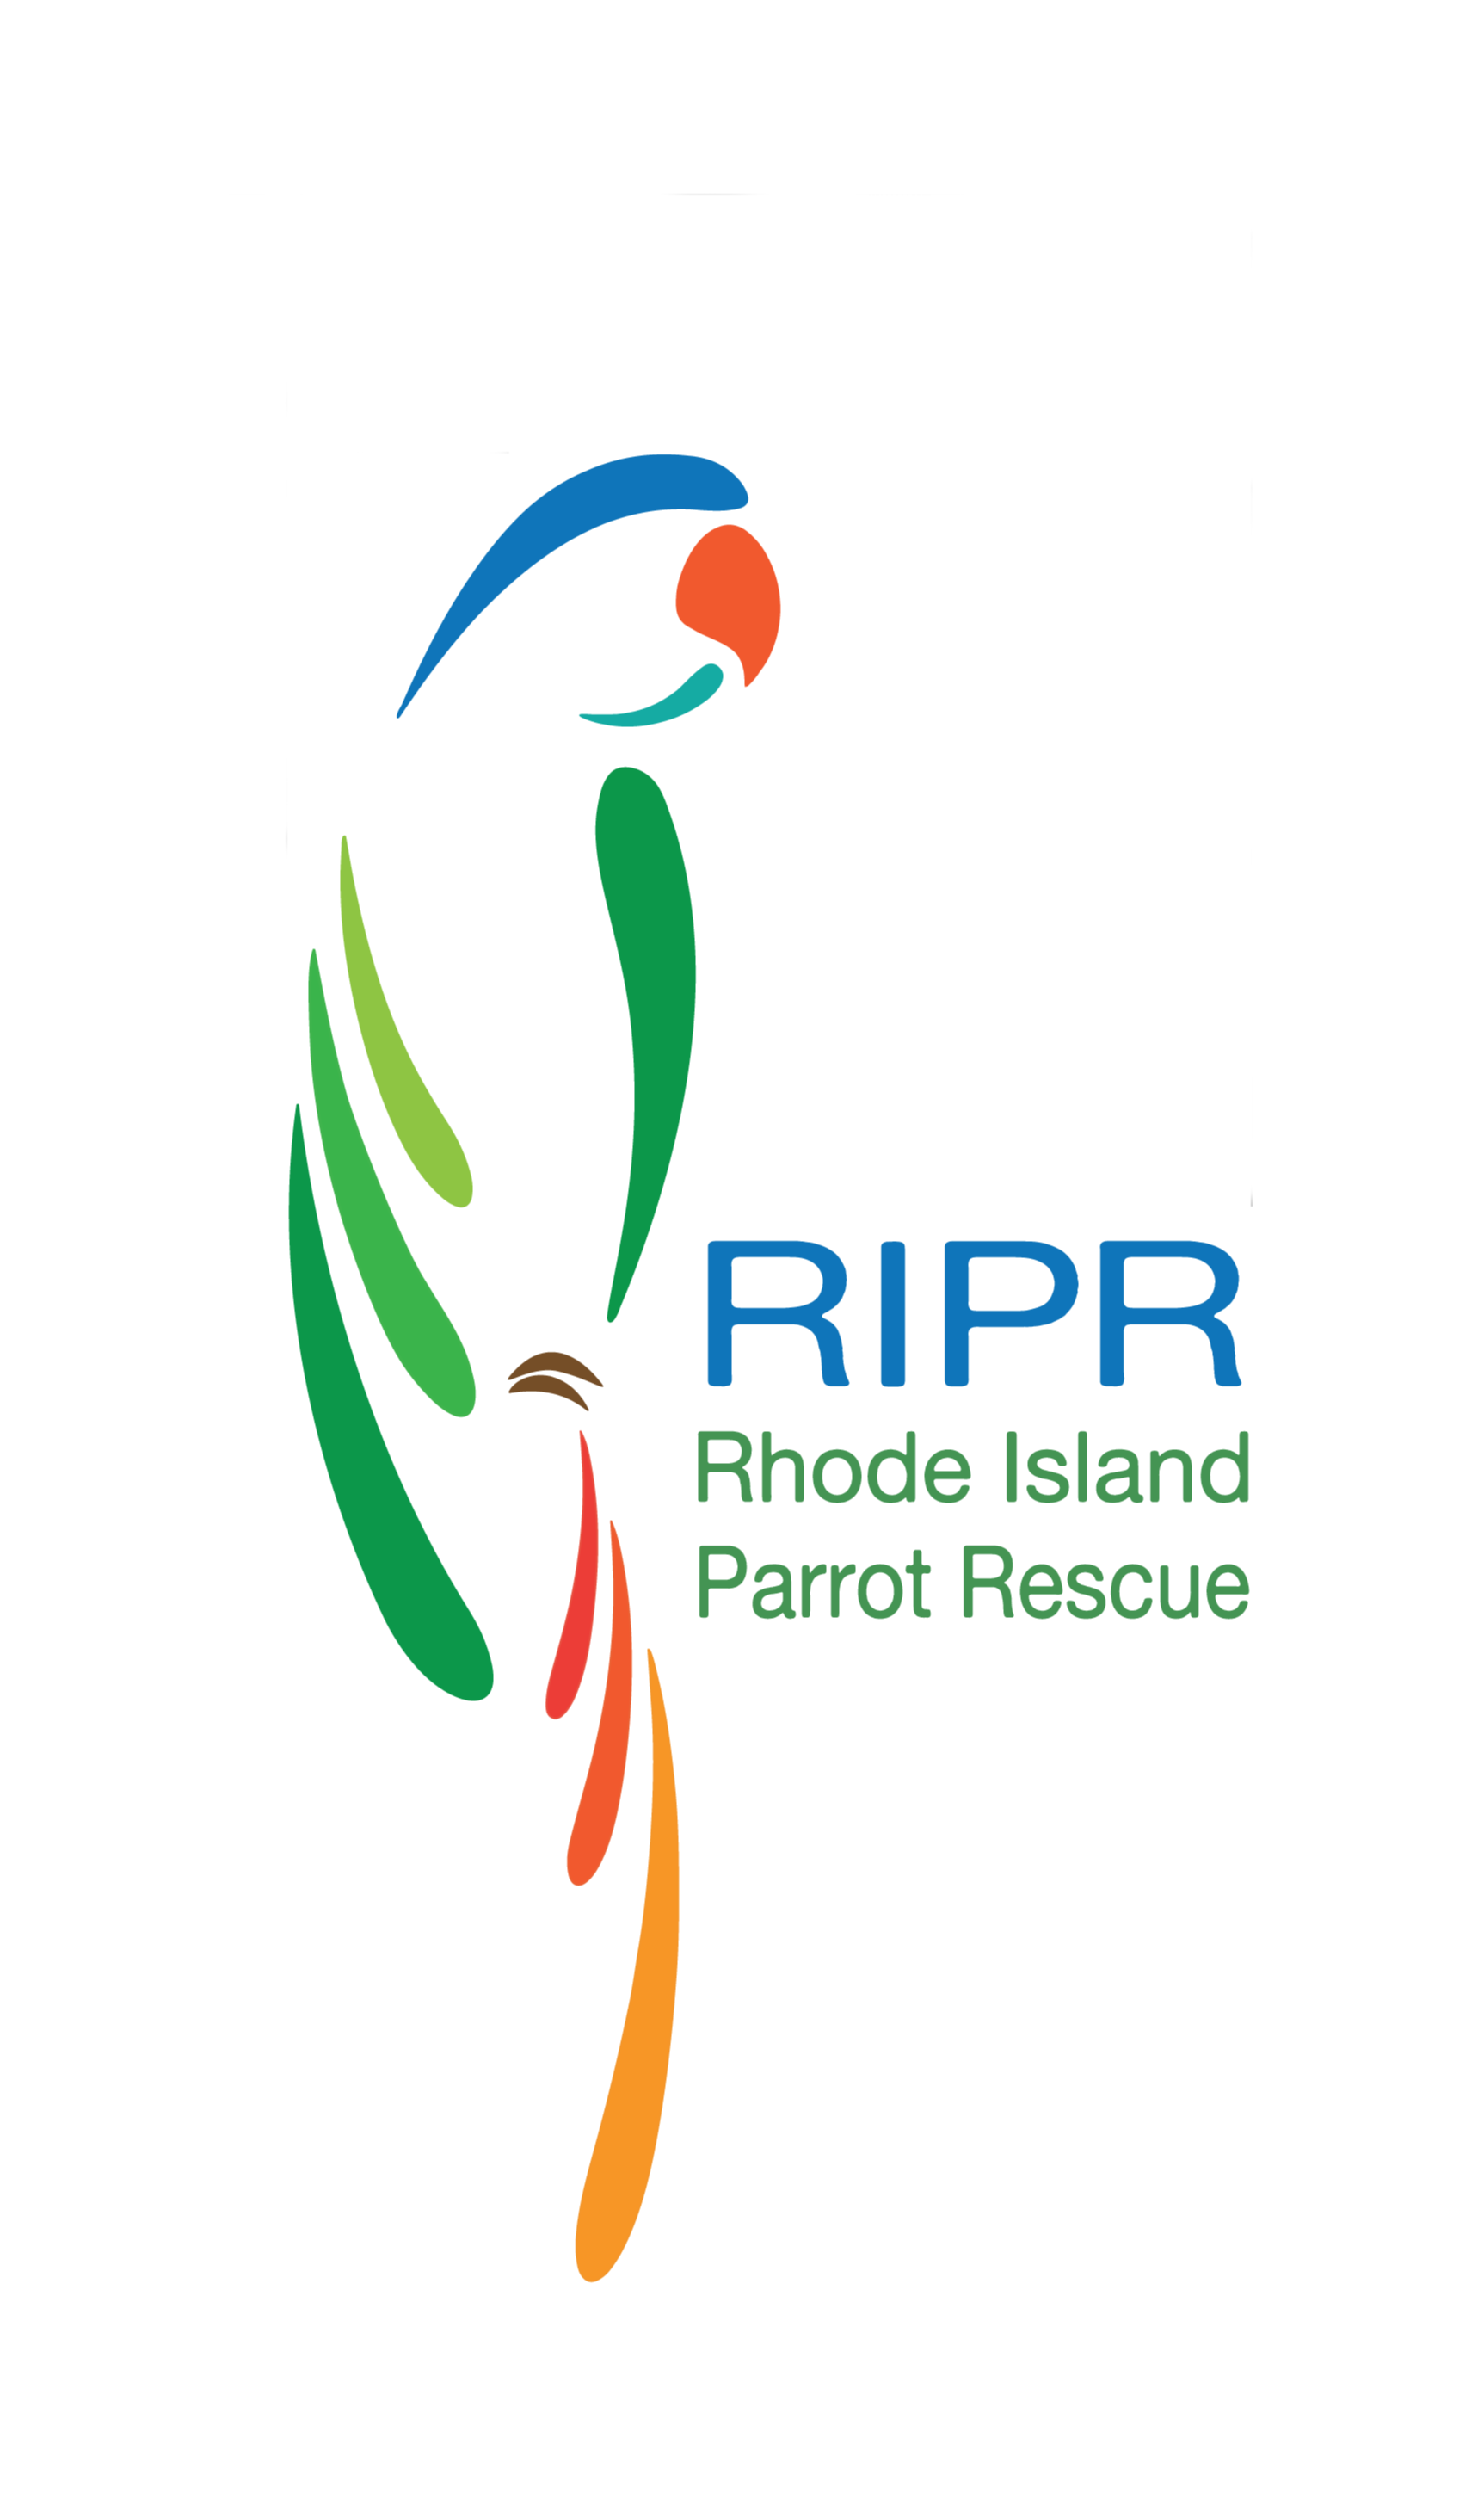 Rhode Island Parrot Rescue logo